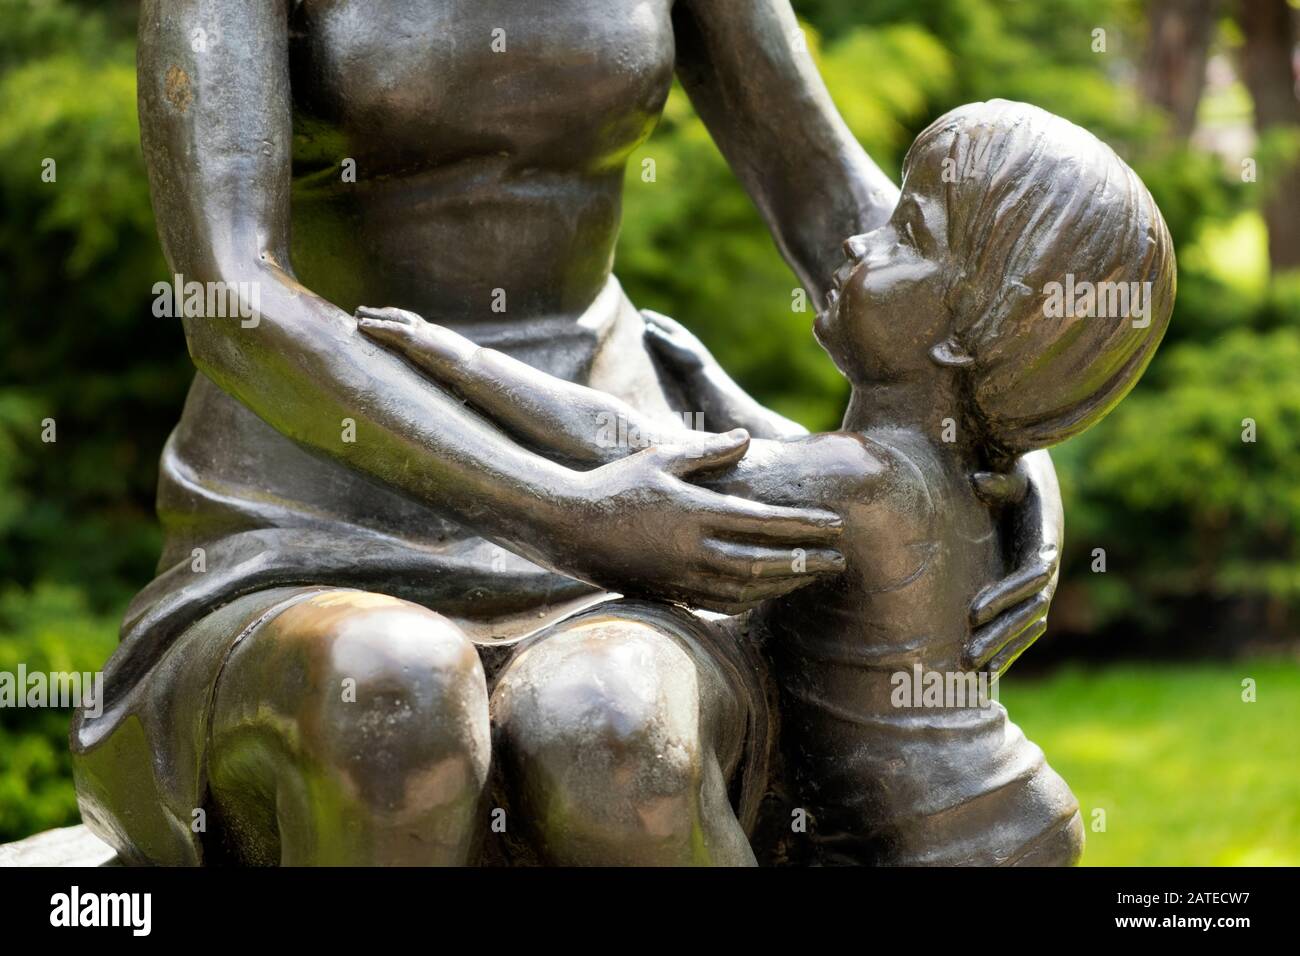 Closeup view of the bronze sculpture La Maternidad of the artist Félix Alonso Arena in Campo de San Francisco urban Park (Oviedo, Asturias, Spain) Stock Photo